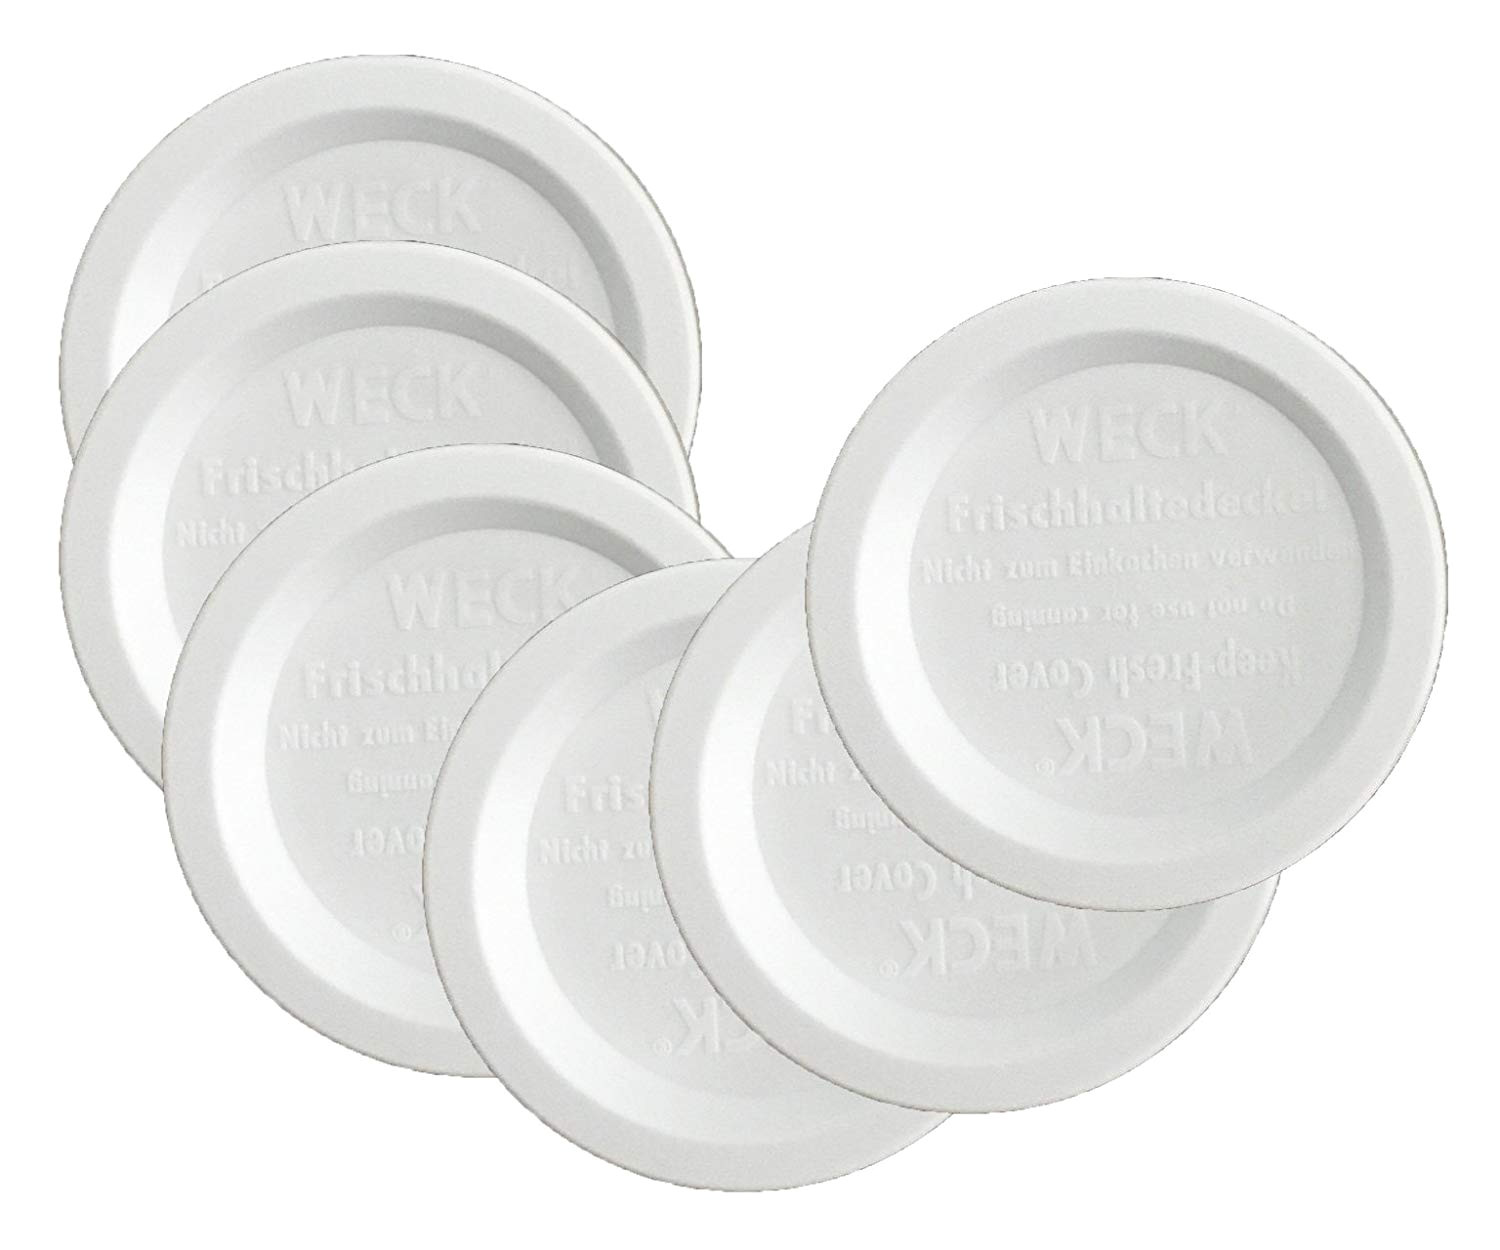 amazon com weck jar keep fresh plastic lids 6 pack large 100mm fits models 740 741 742 743 738 739 744 745 748 974 kitchen dining